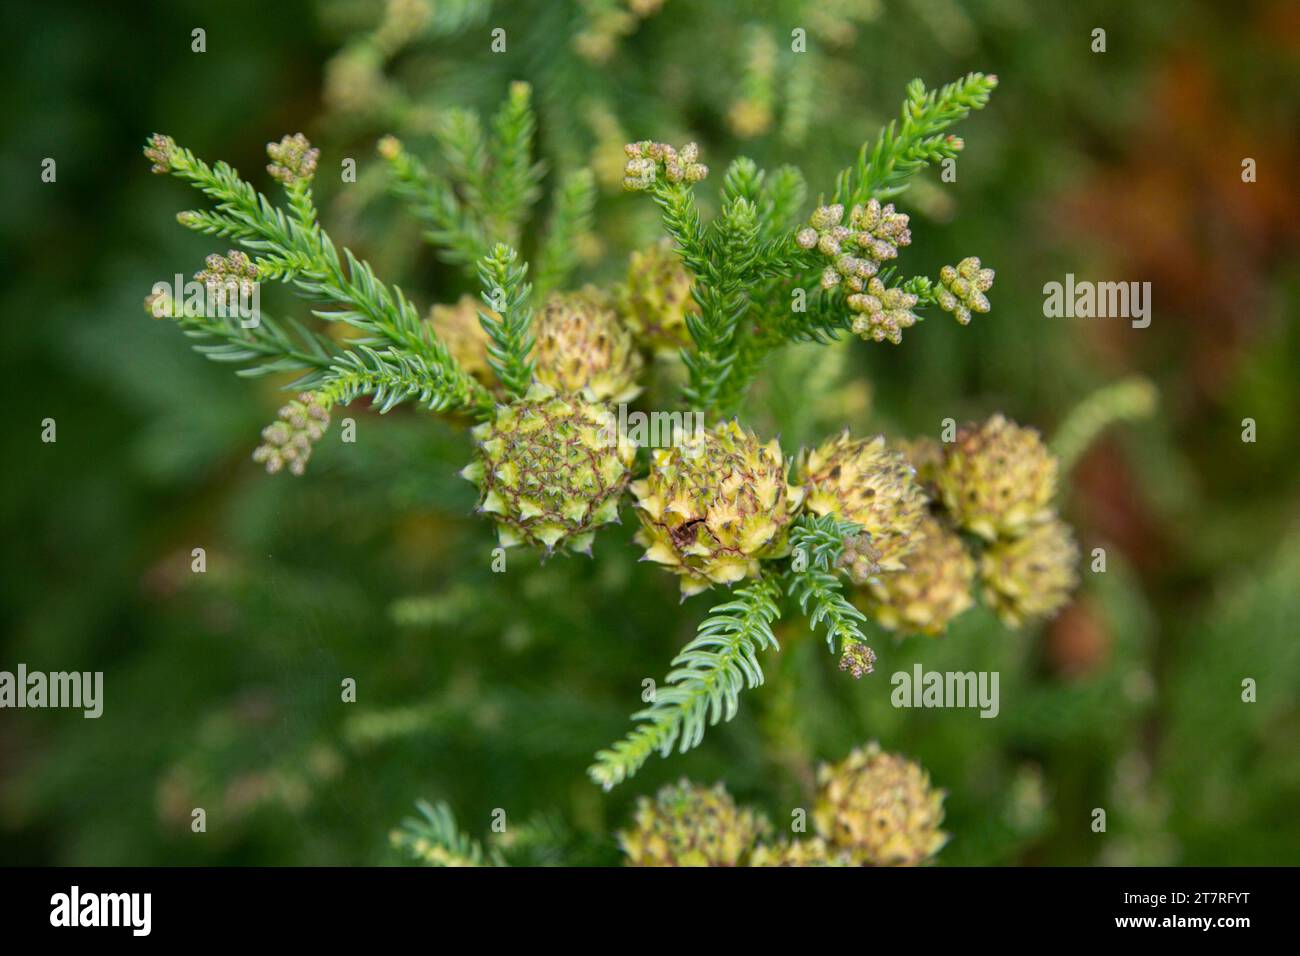 Japanese pine, is a pine tree native to coastal areas of Japan Stock Photo